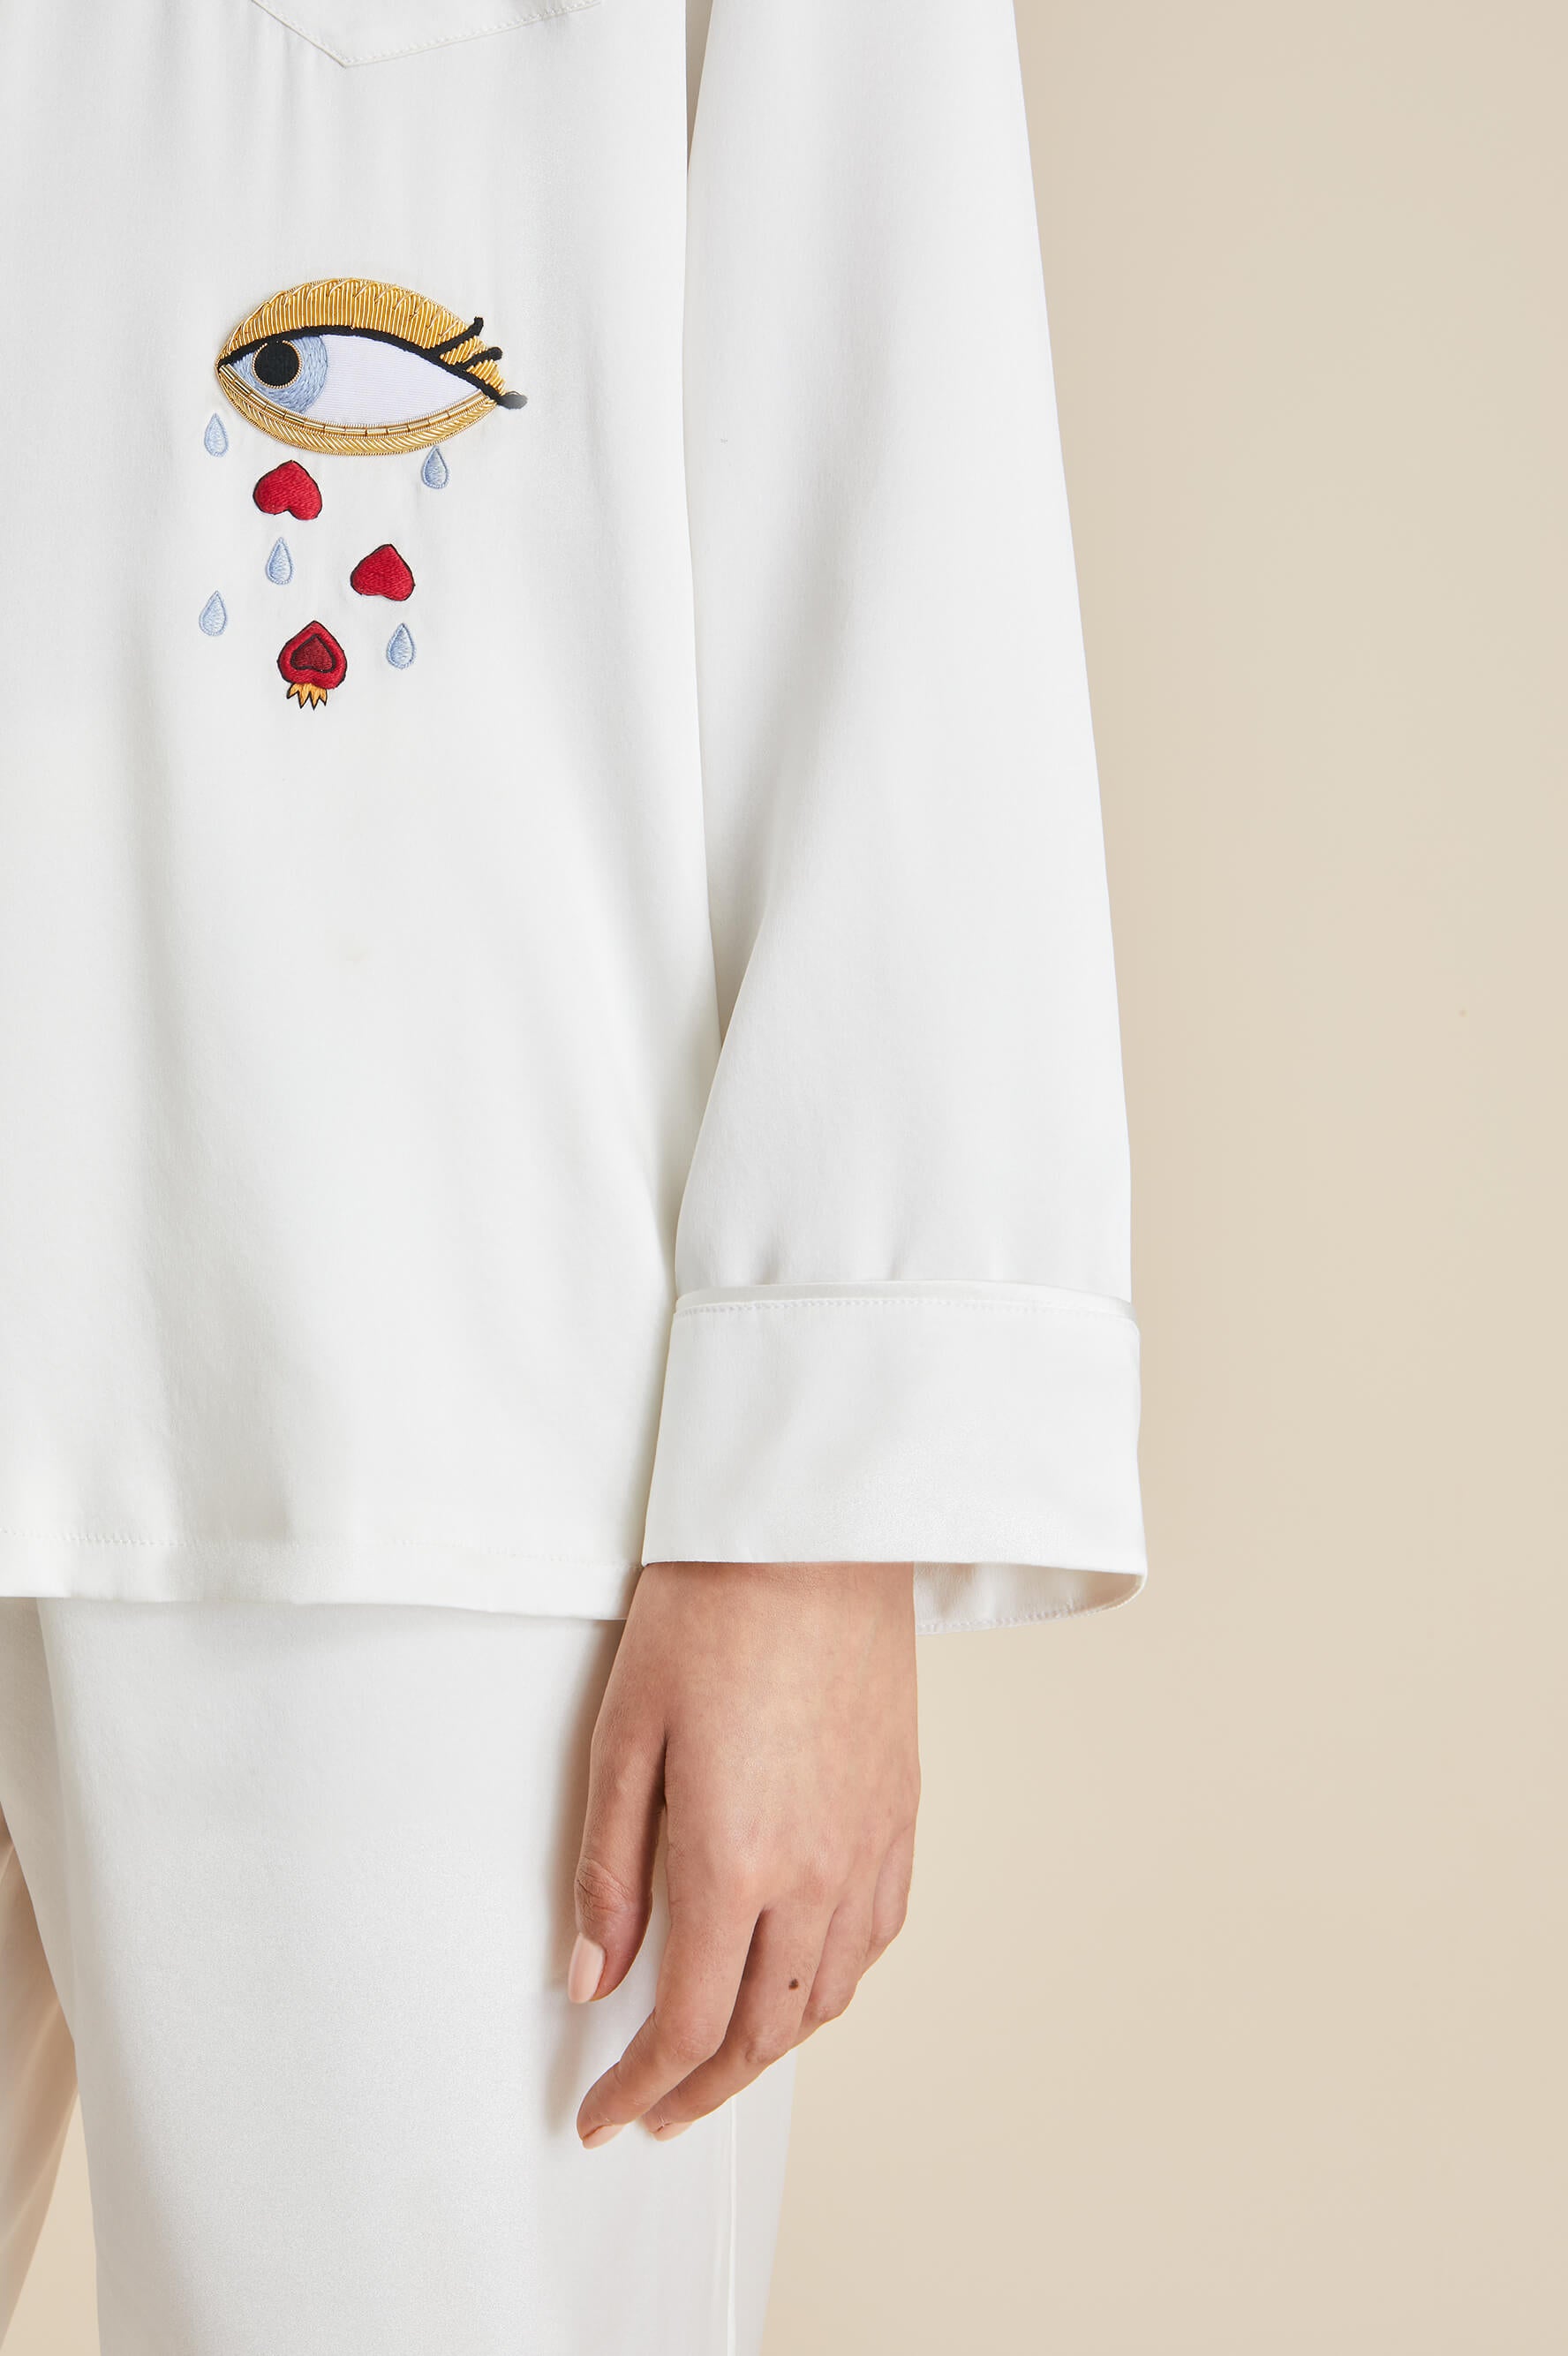 Yves Desire Ivory Pyjamas in Silk Satin